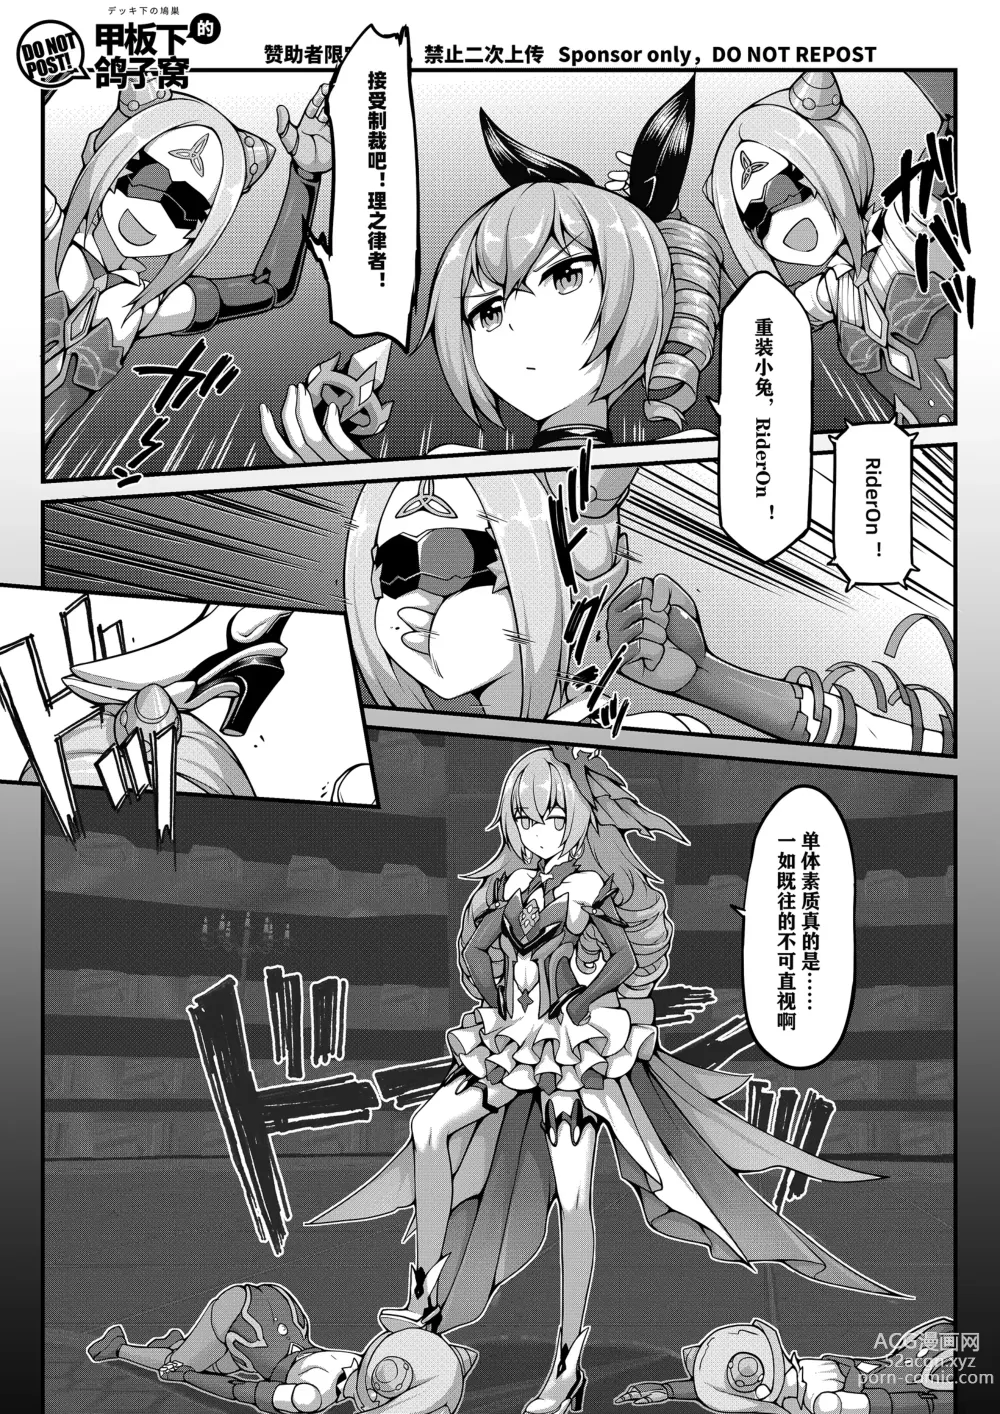 Page 4 of manga 银狼奇遇